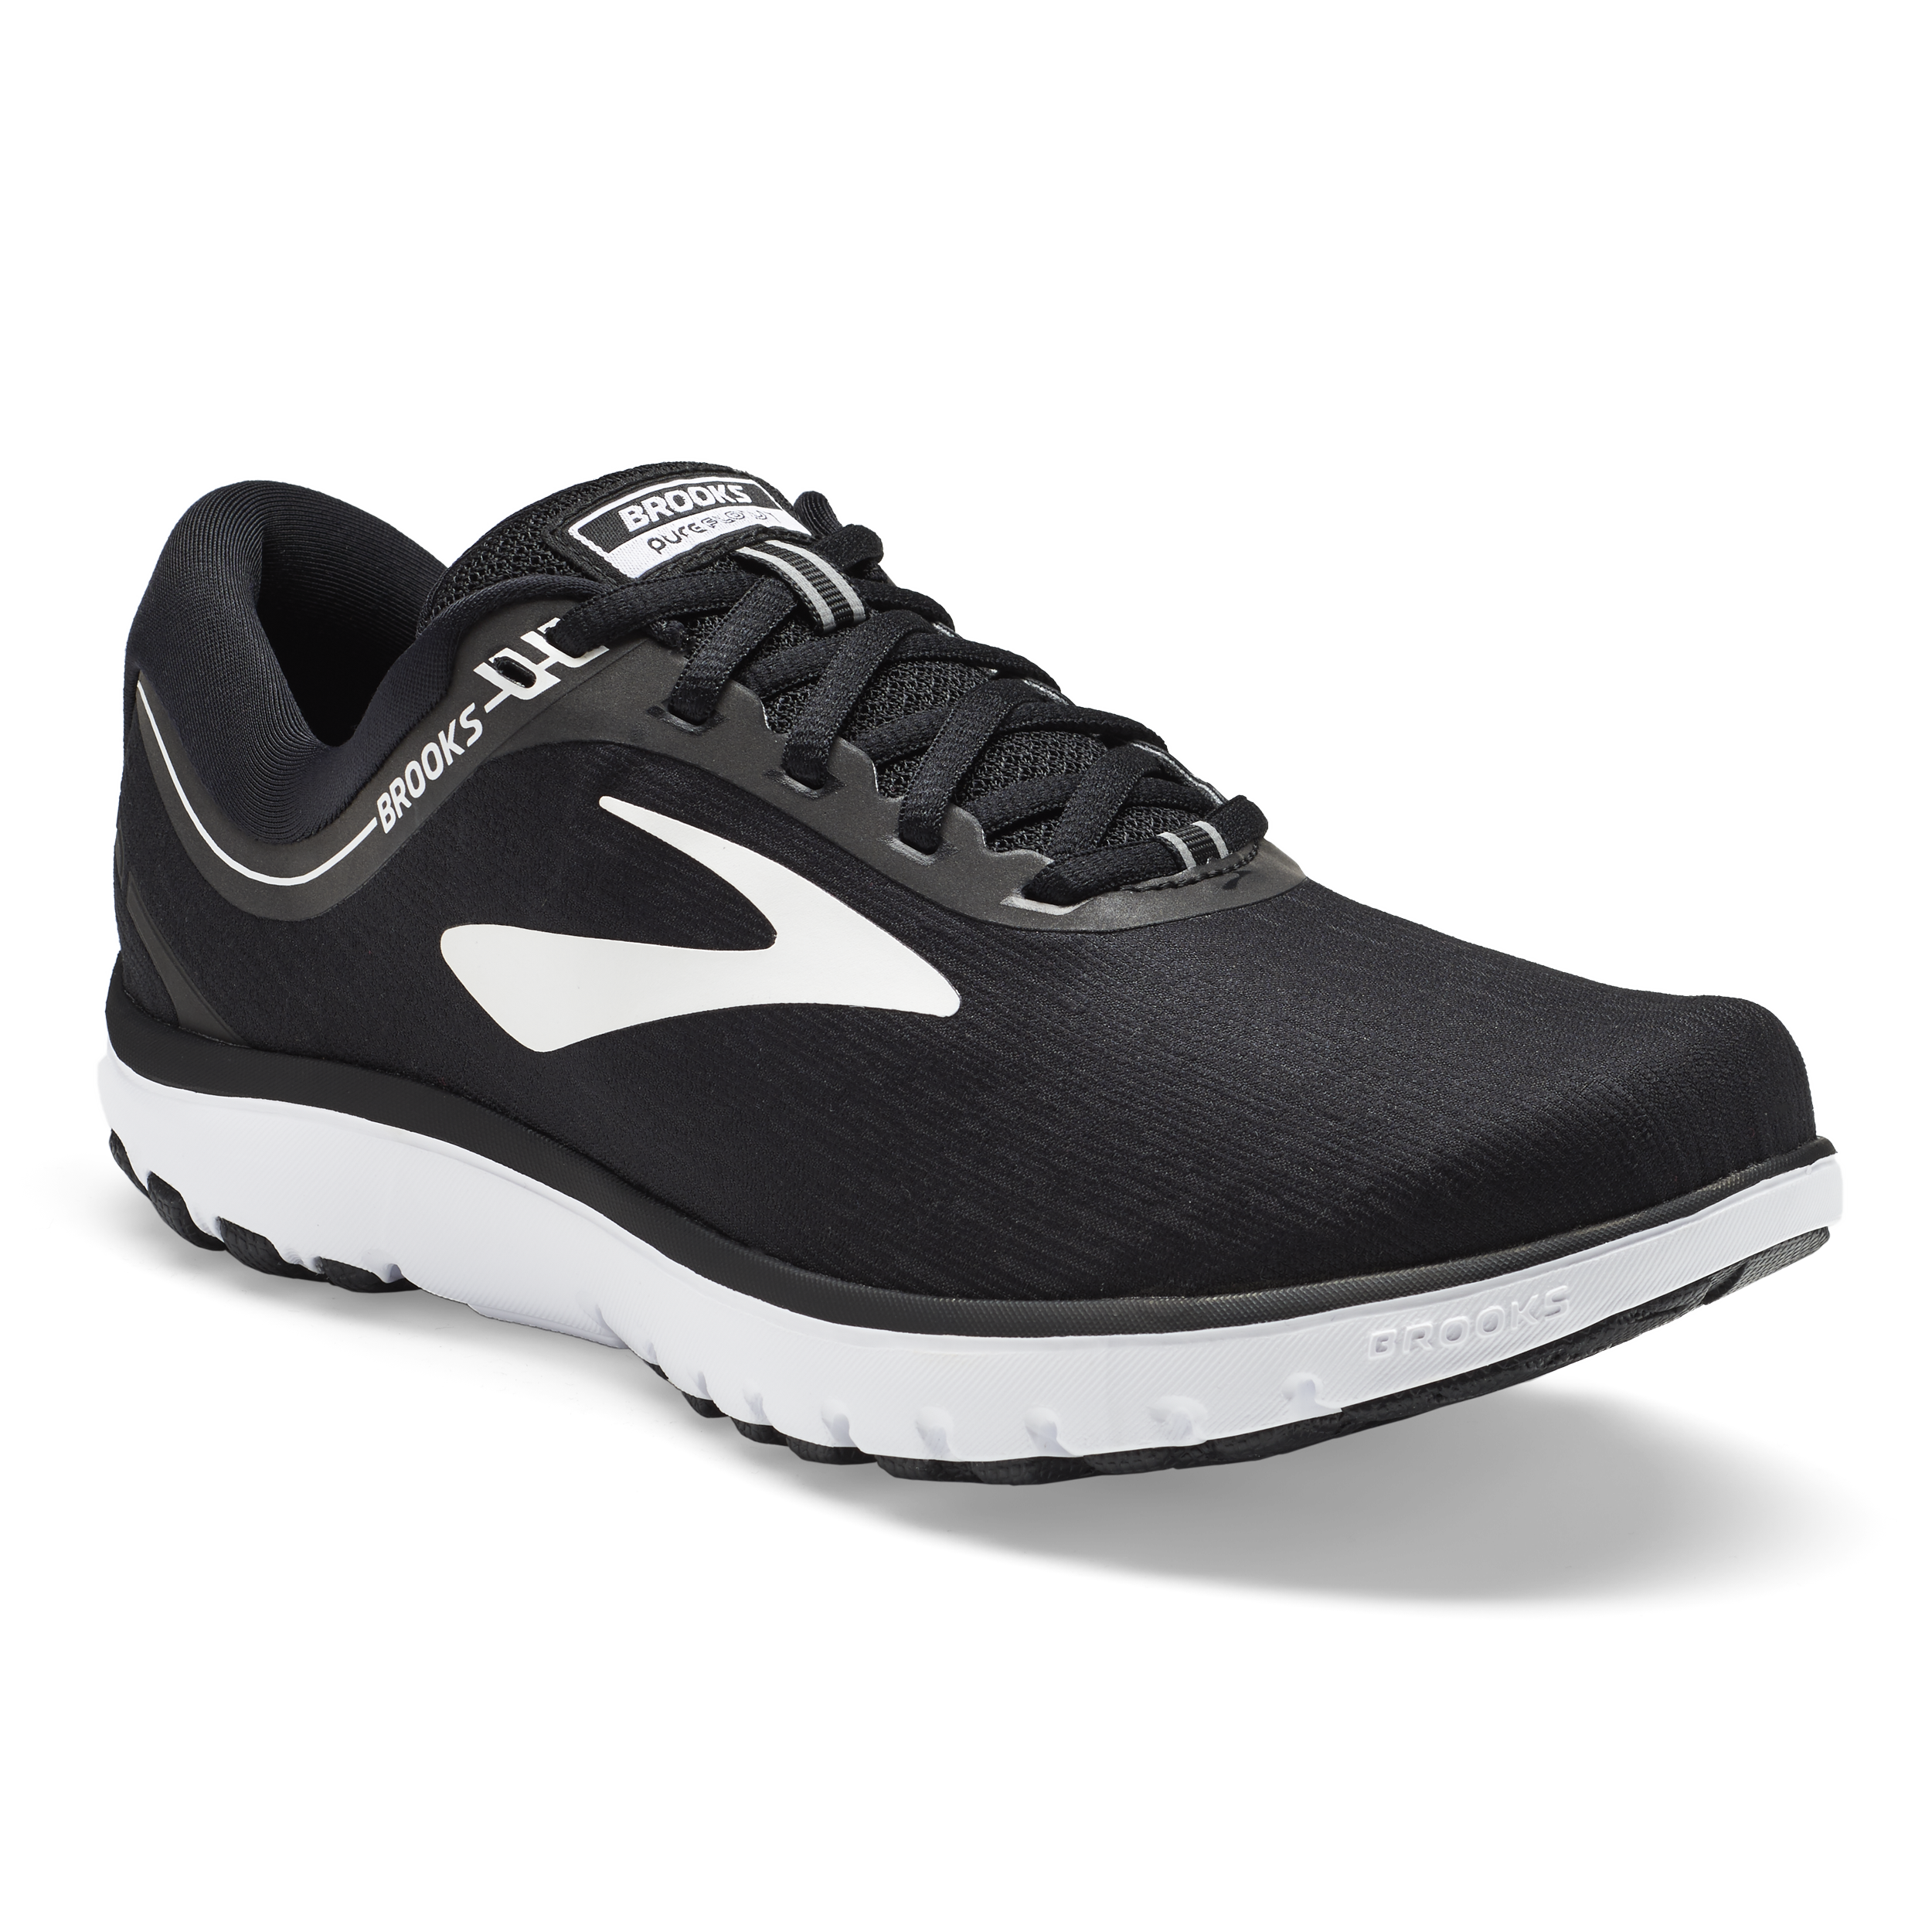 Women's Running Shoe Size 7 NEW BROOKS PureFlow 7 120262 1B 048 